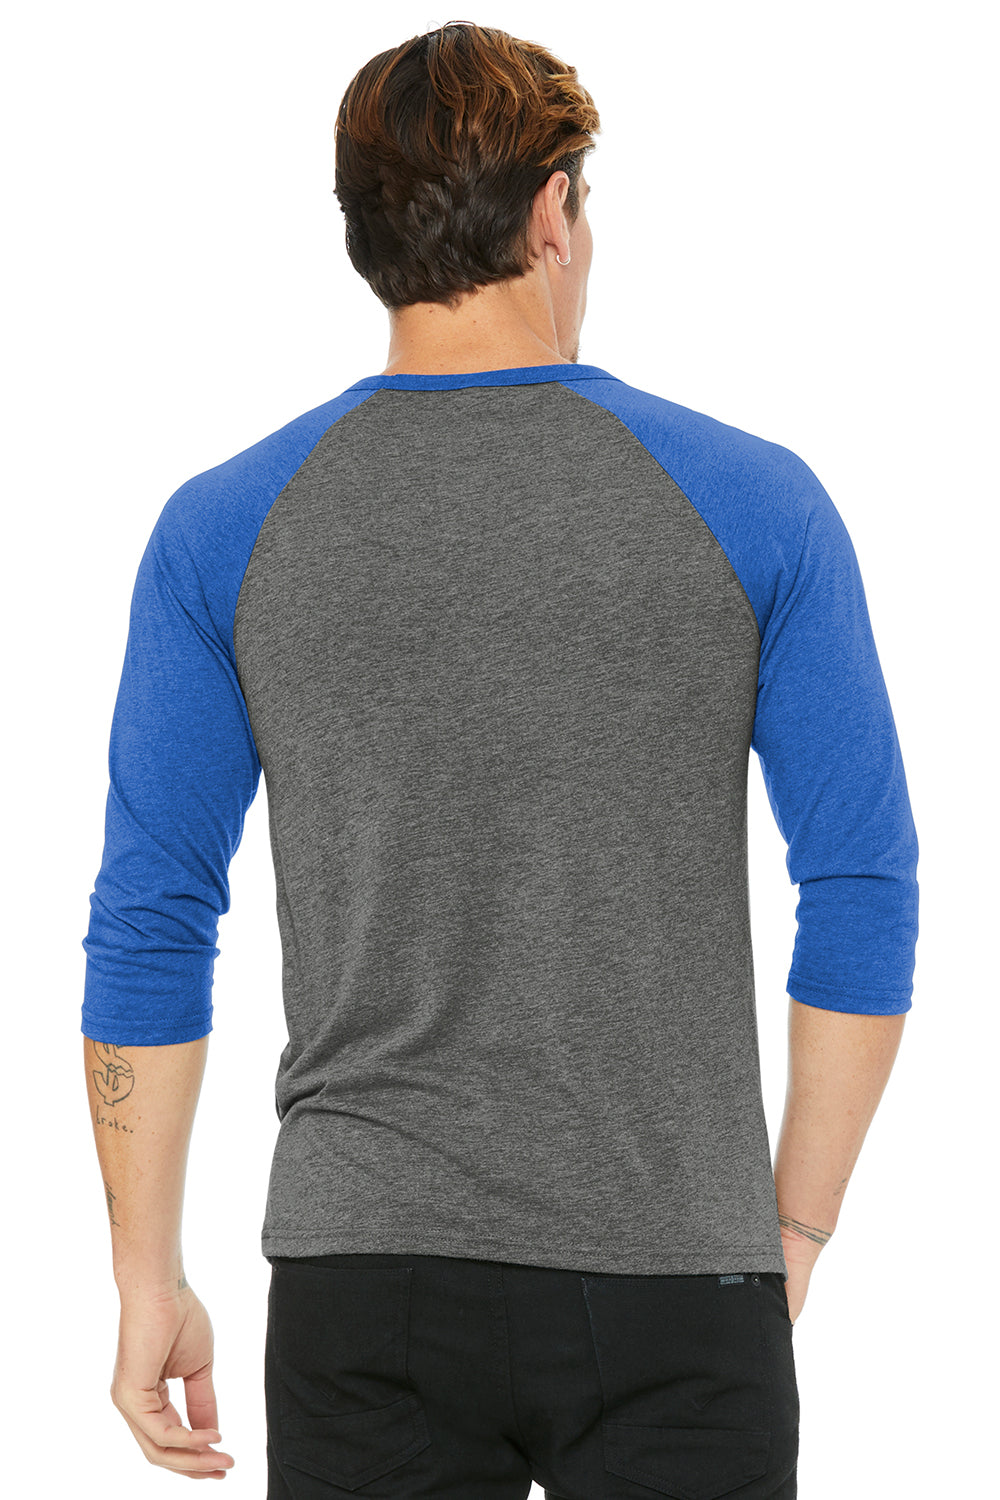 Bella + Canvas BC3200/3200 Mens 3/4 Sleeve Crewneck T-Shirt Grey/Royal Blue Model Back